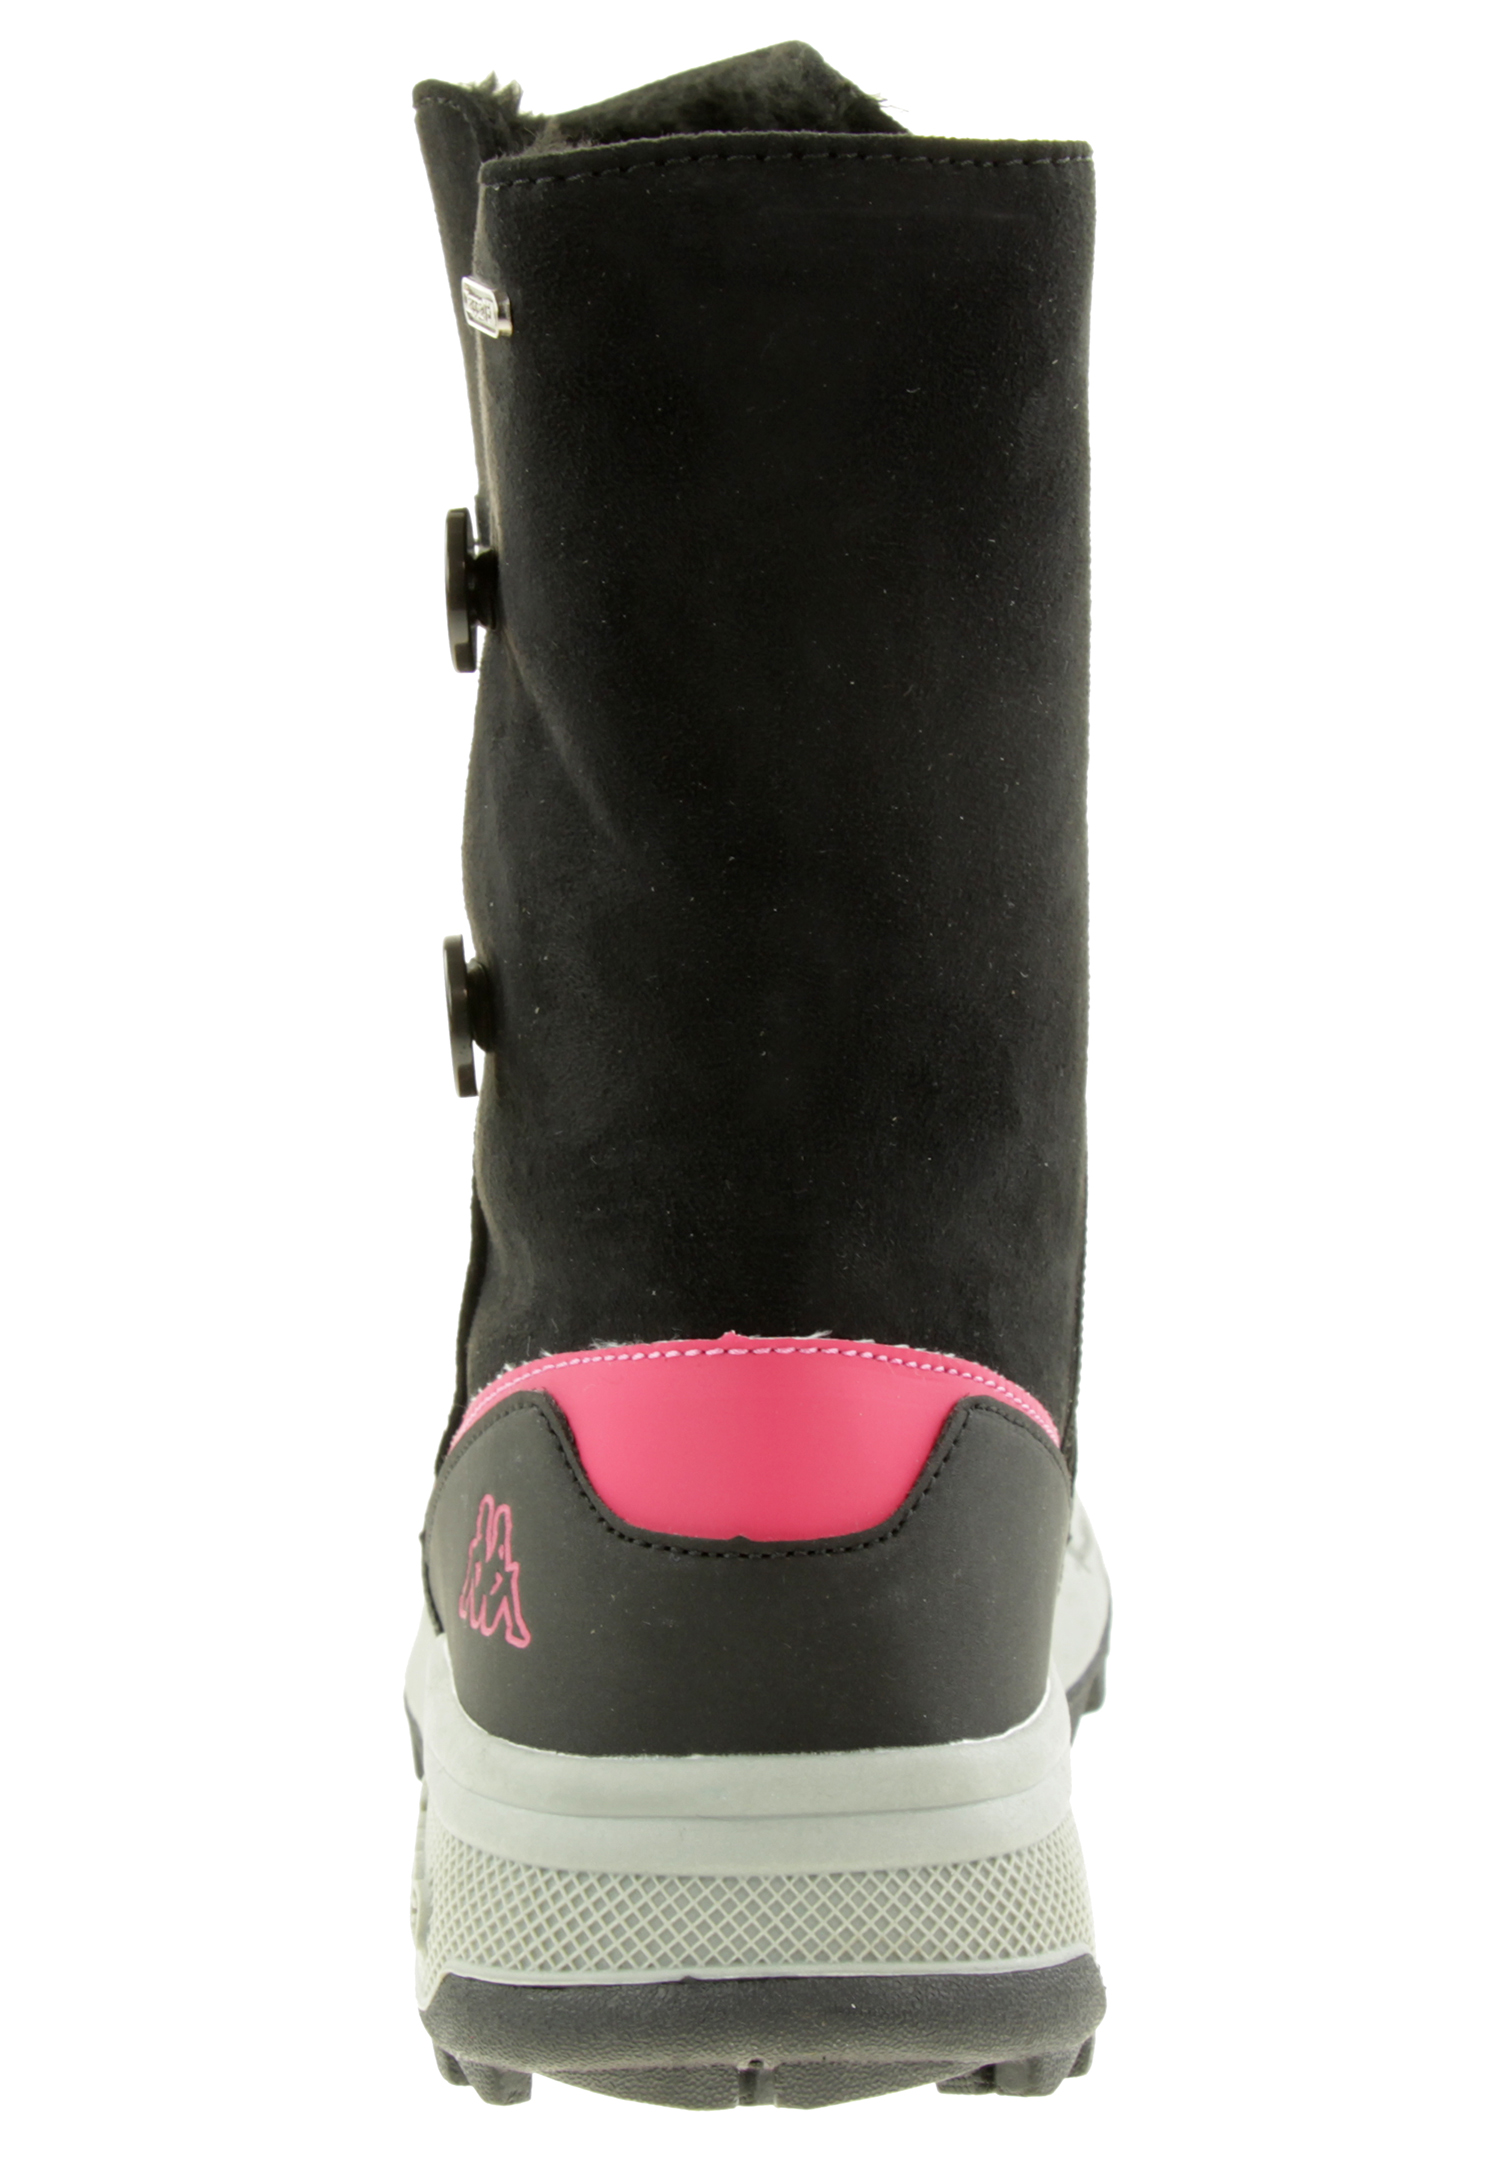 Kappa Damen Kids Stiefelette Winterschuh Boots 260901T schwarz pink